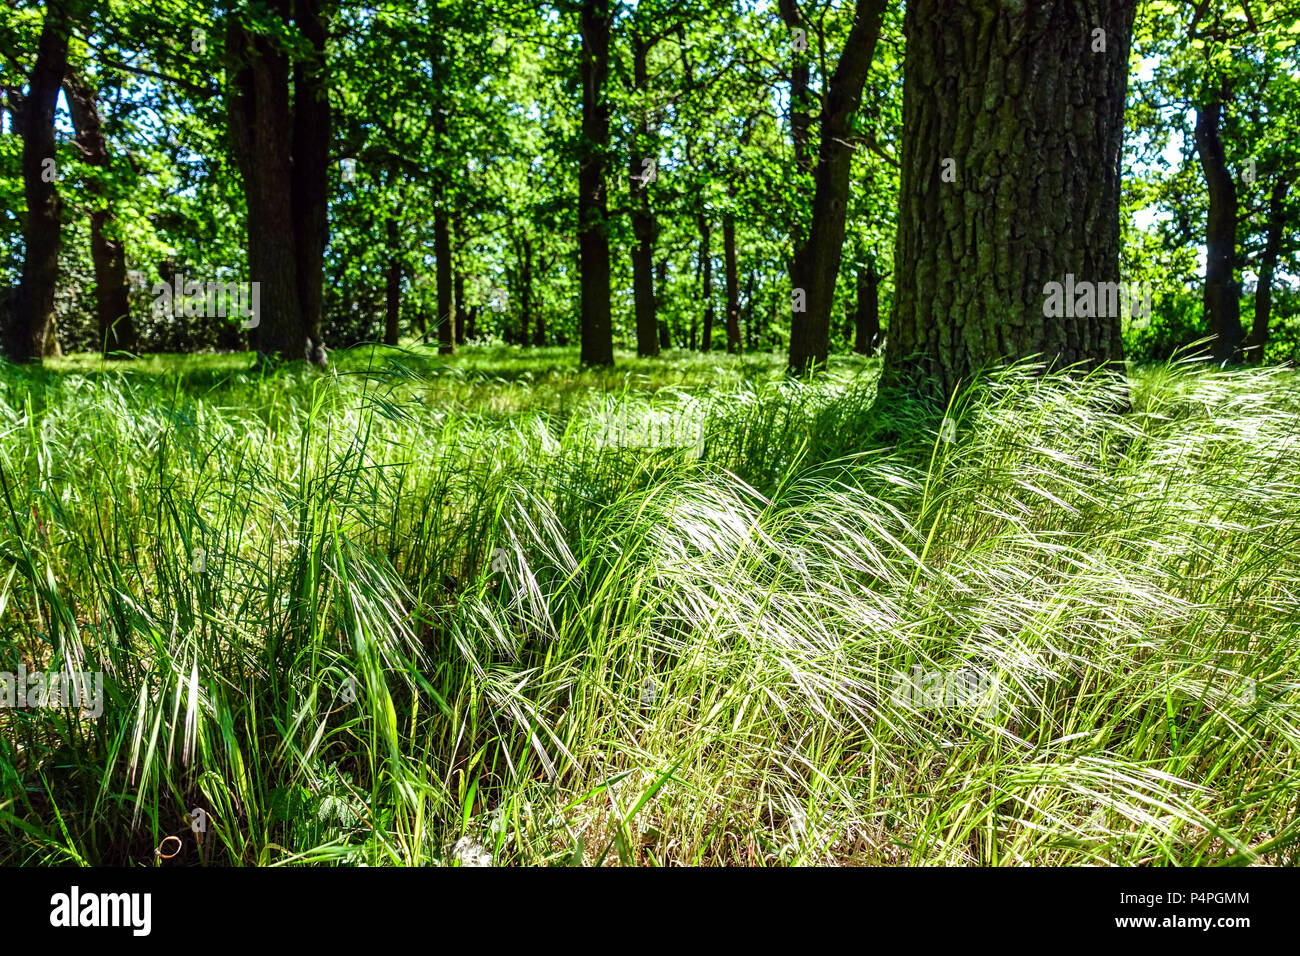 Grass under oak trees in forest Undergrowth, Woodland forest grass Stock Photo